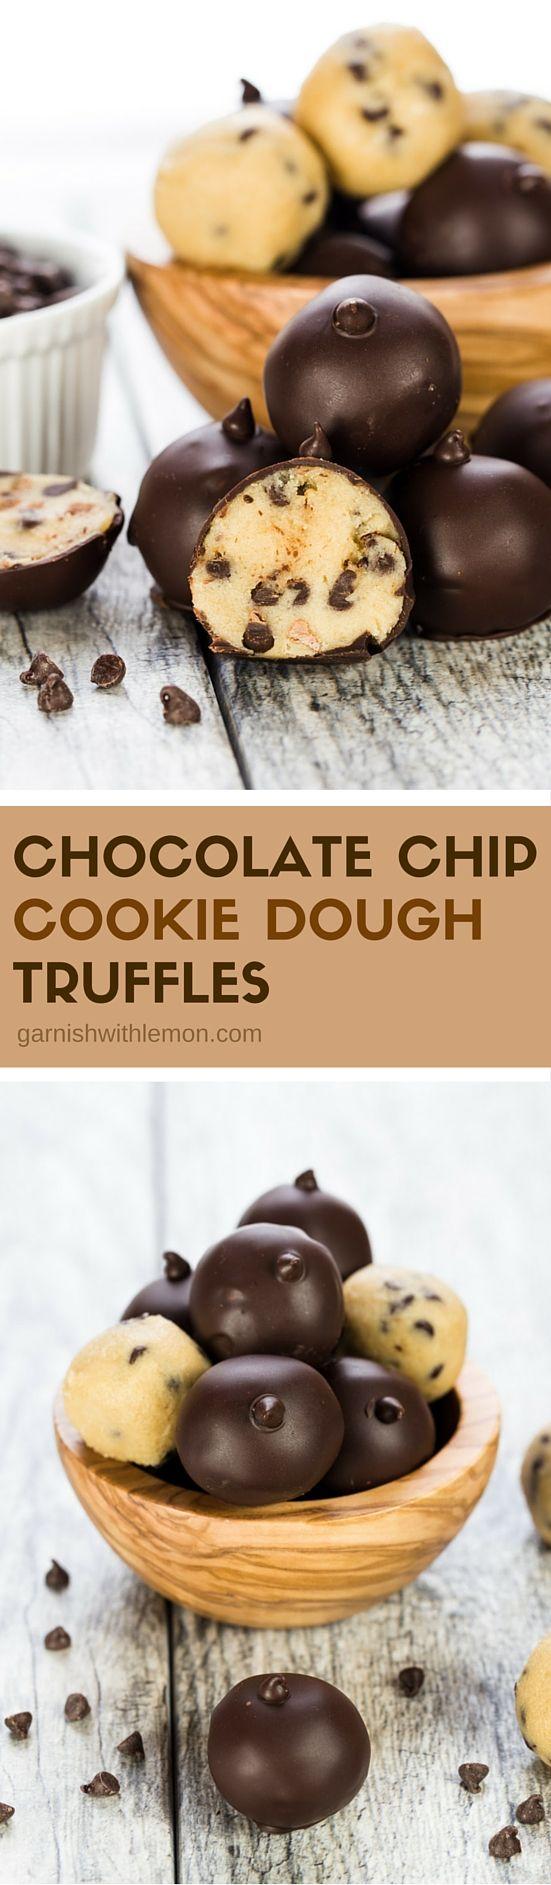 Wedding - Chocolate Chip Cookie Dough Truffles